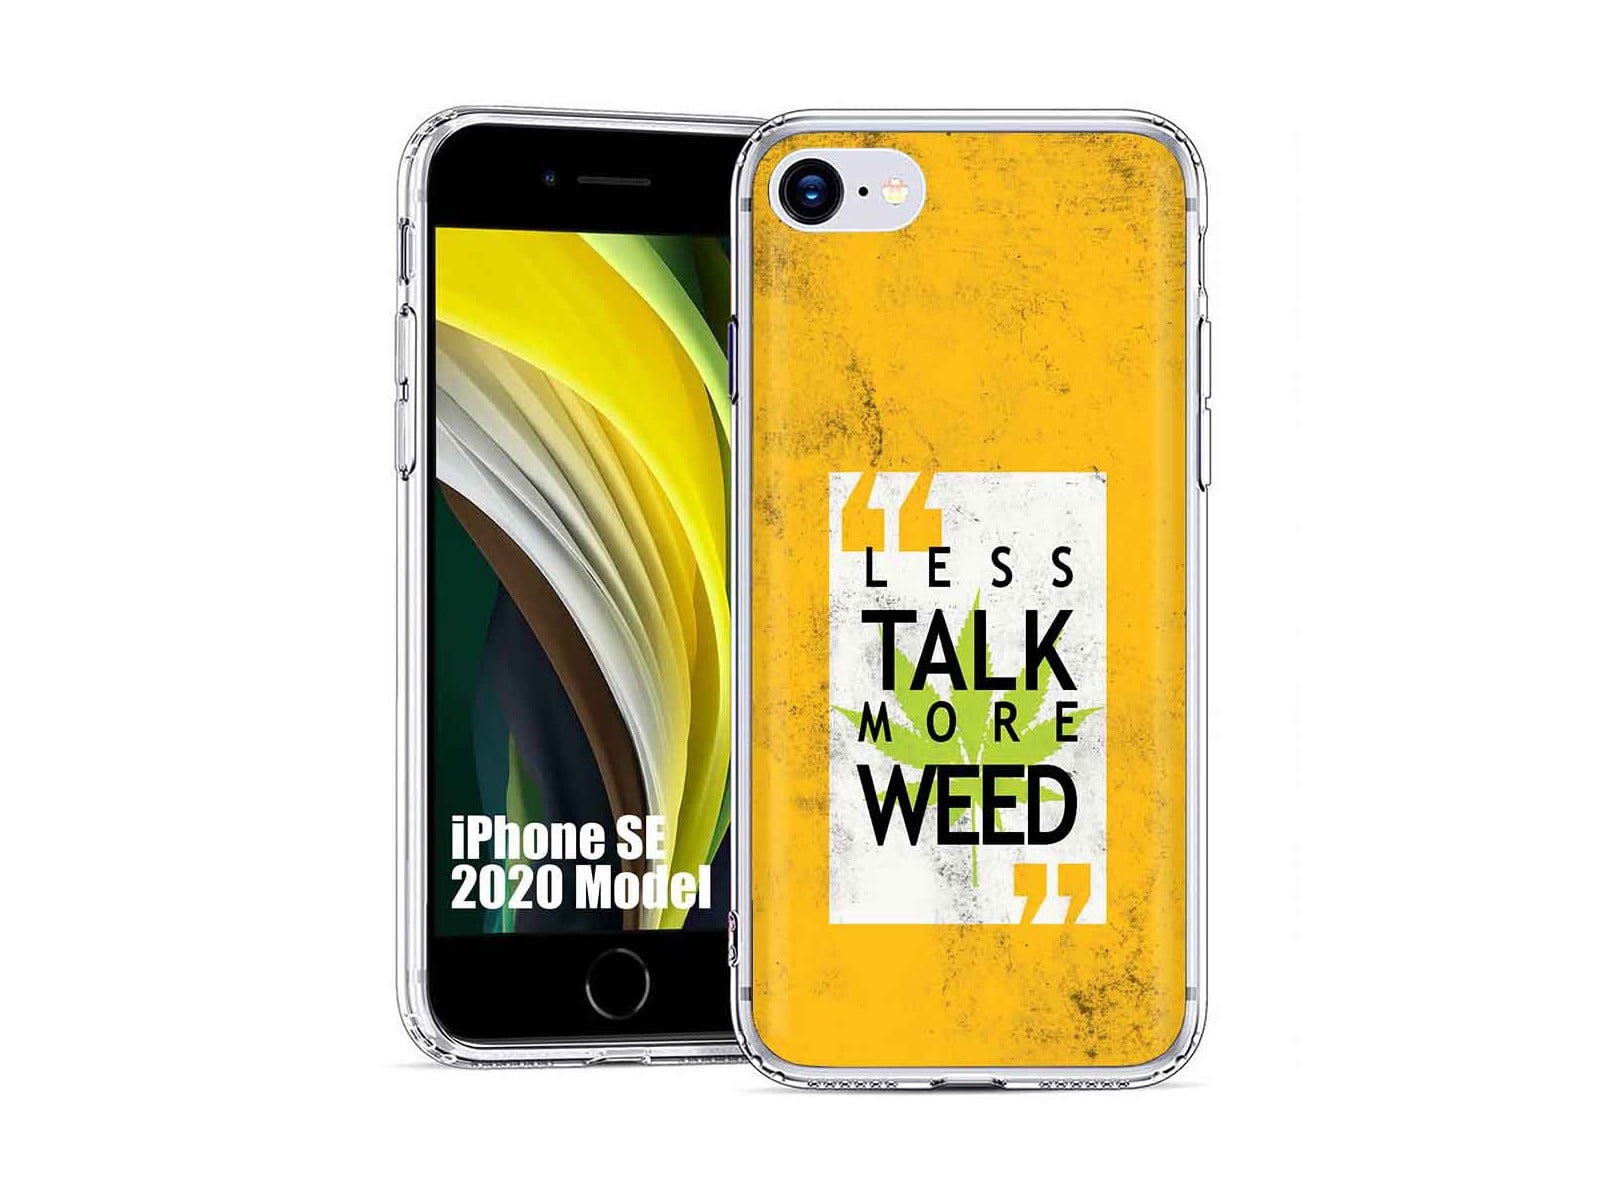 Kalmte aanklager Wolkenkrabber TalkingCase TPU Phone Case Cover for Apple iPhone SE 2020,7/8,Less Talk  More Weed Print,Designed in USA - Walmart.com